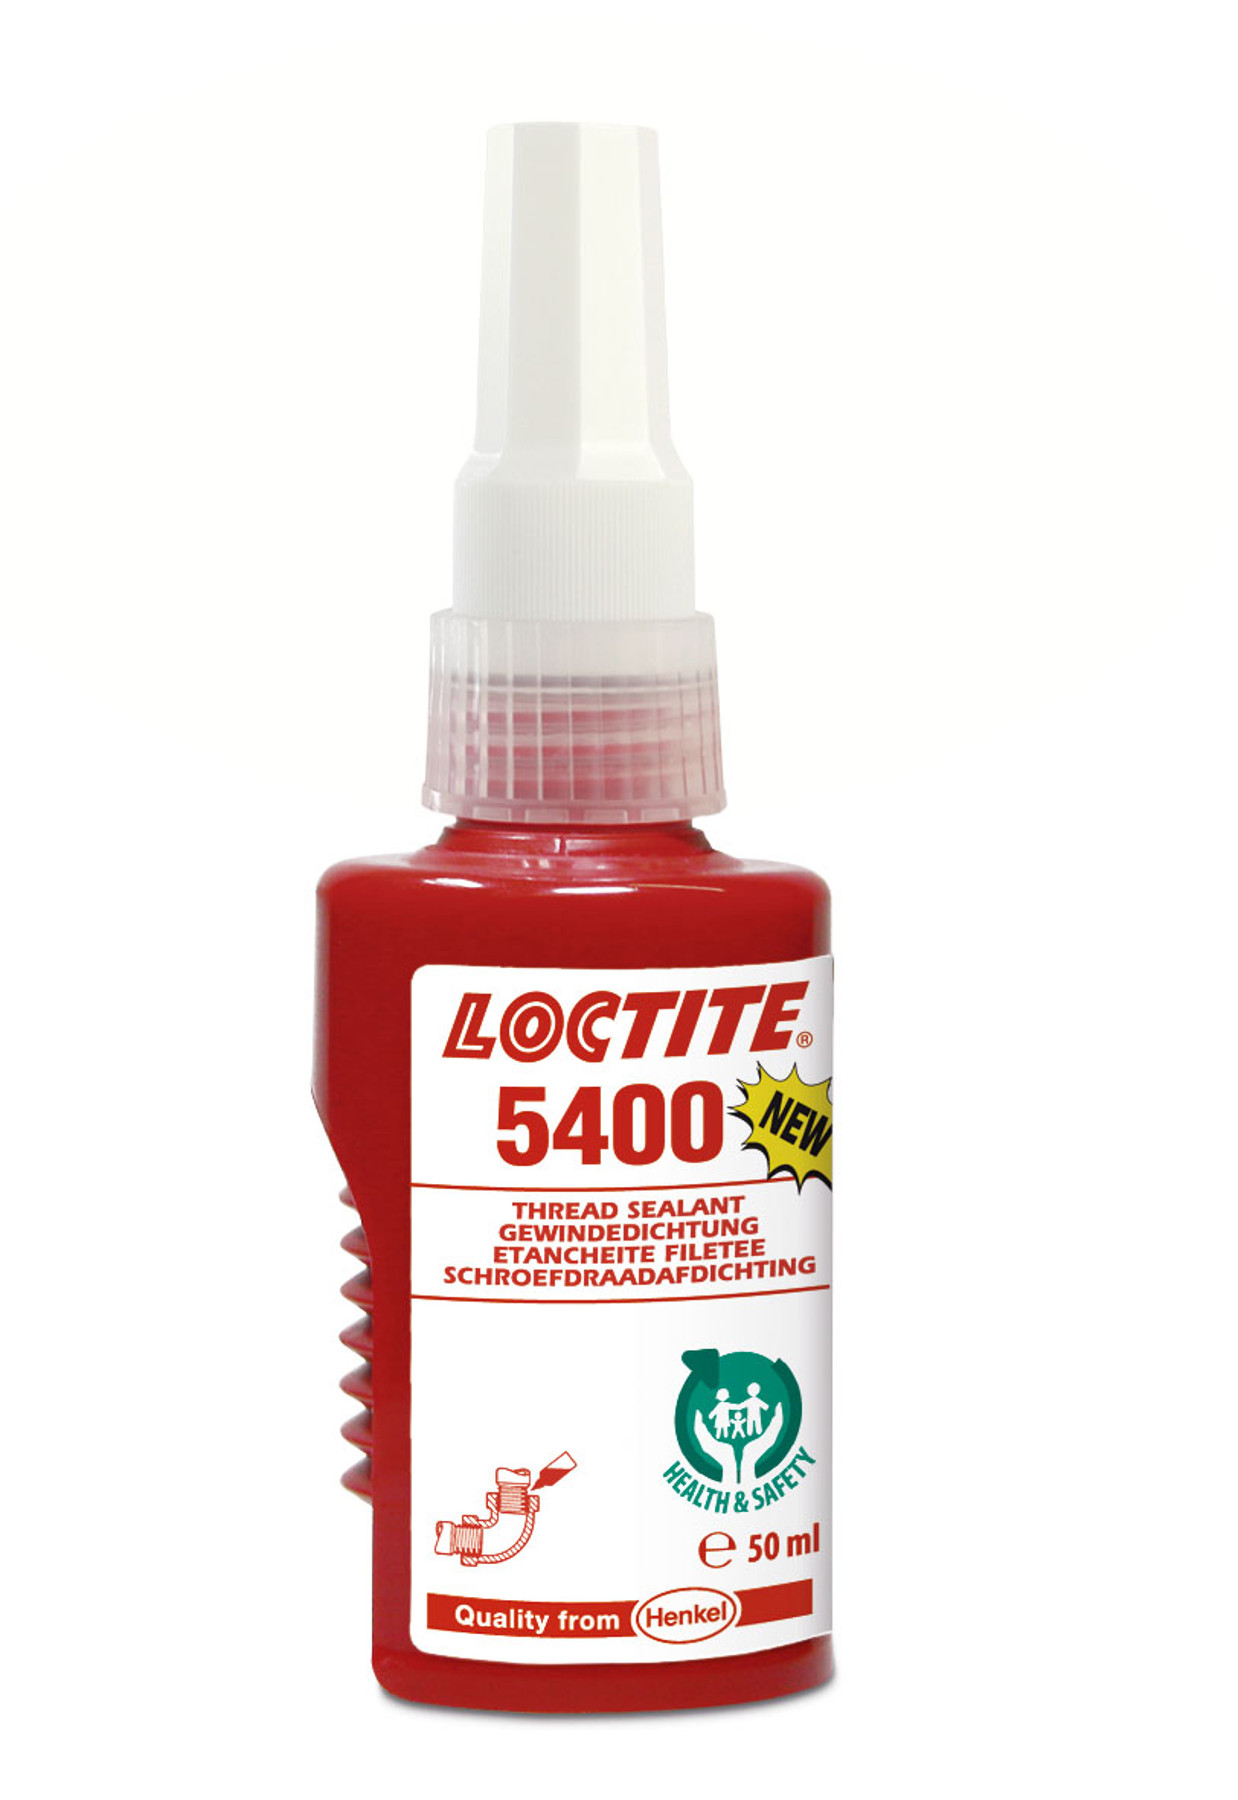 Loctite 5400 Hydraulikdichtung